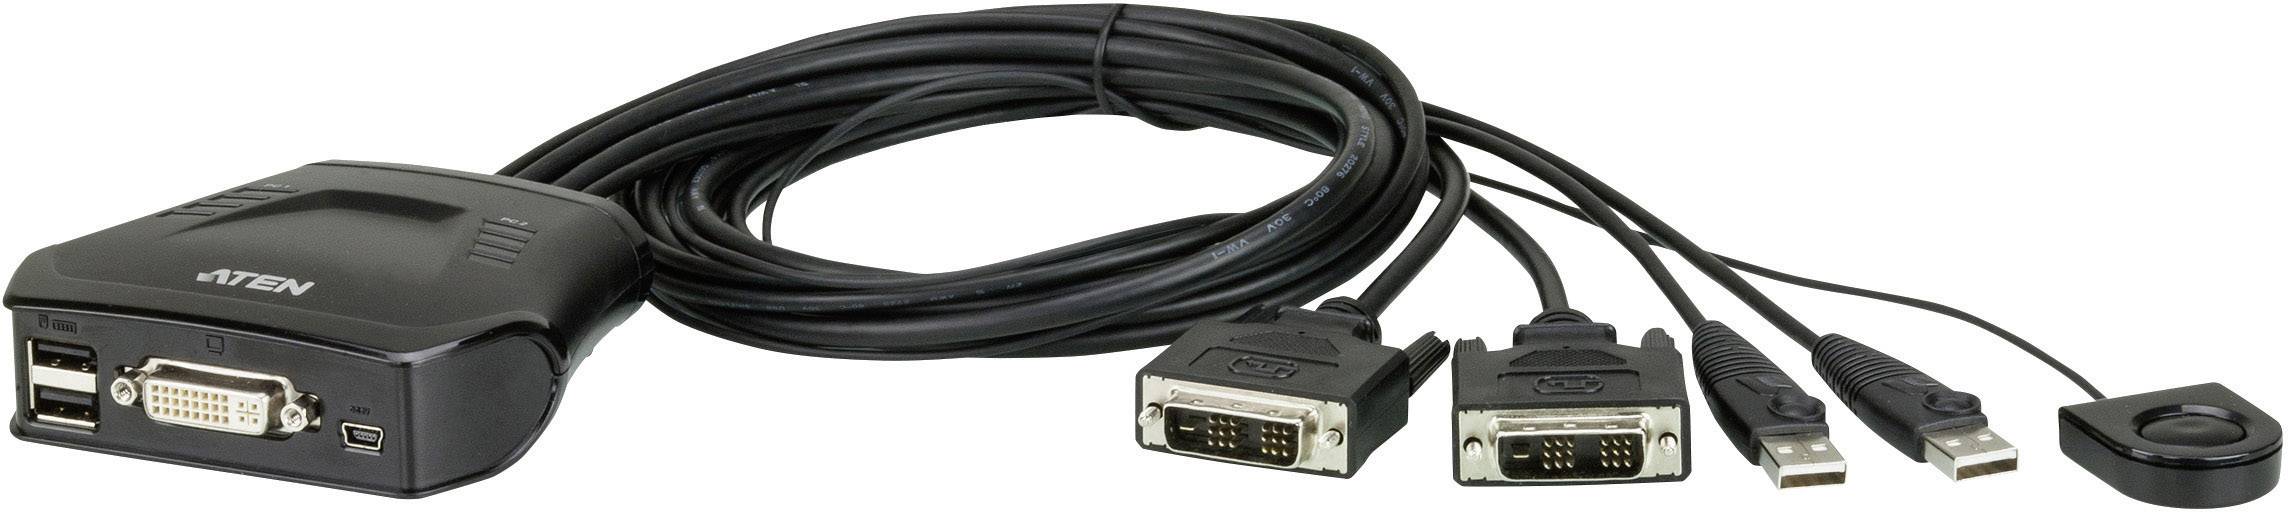 ATEN KVM Switch CS22D 2 Port USB DVI